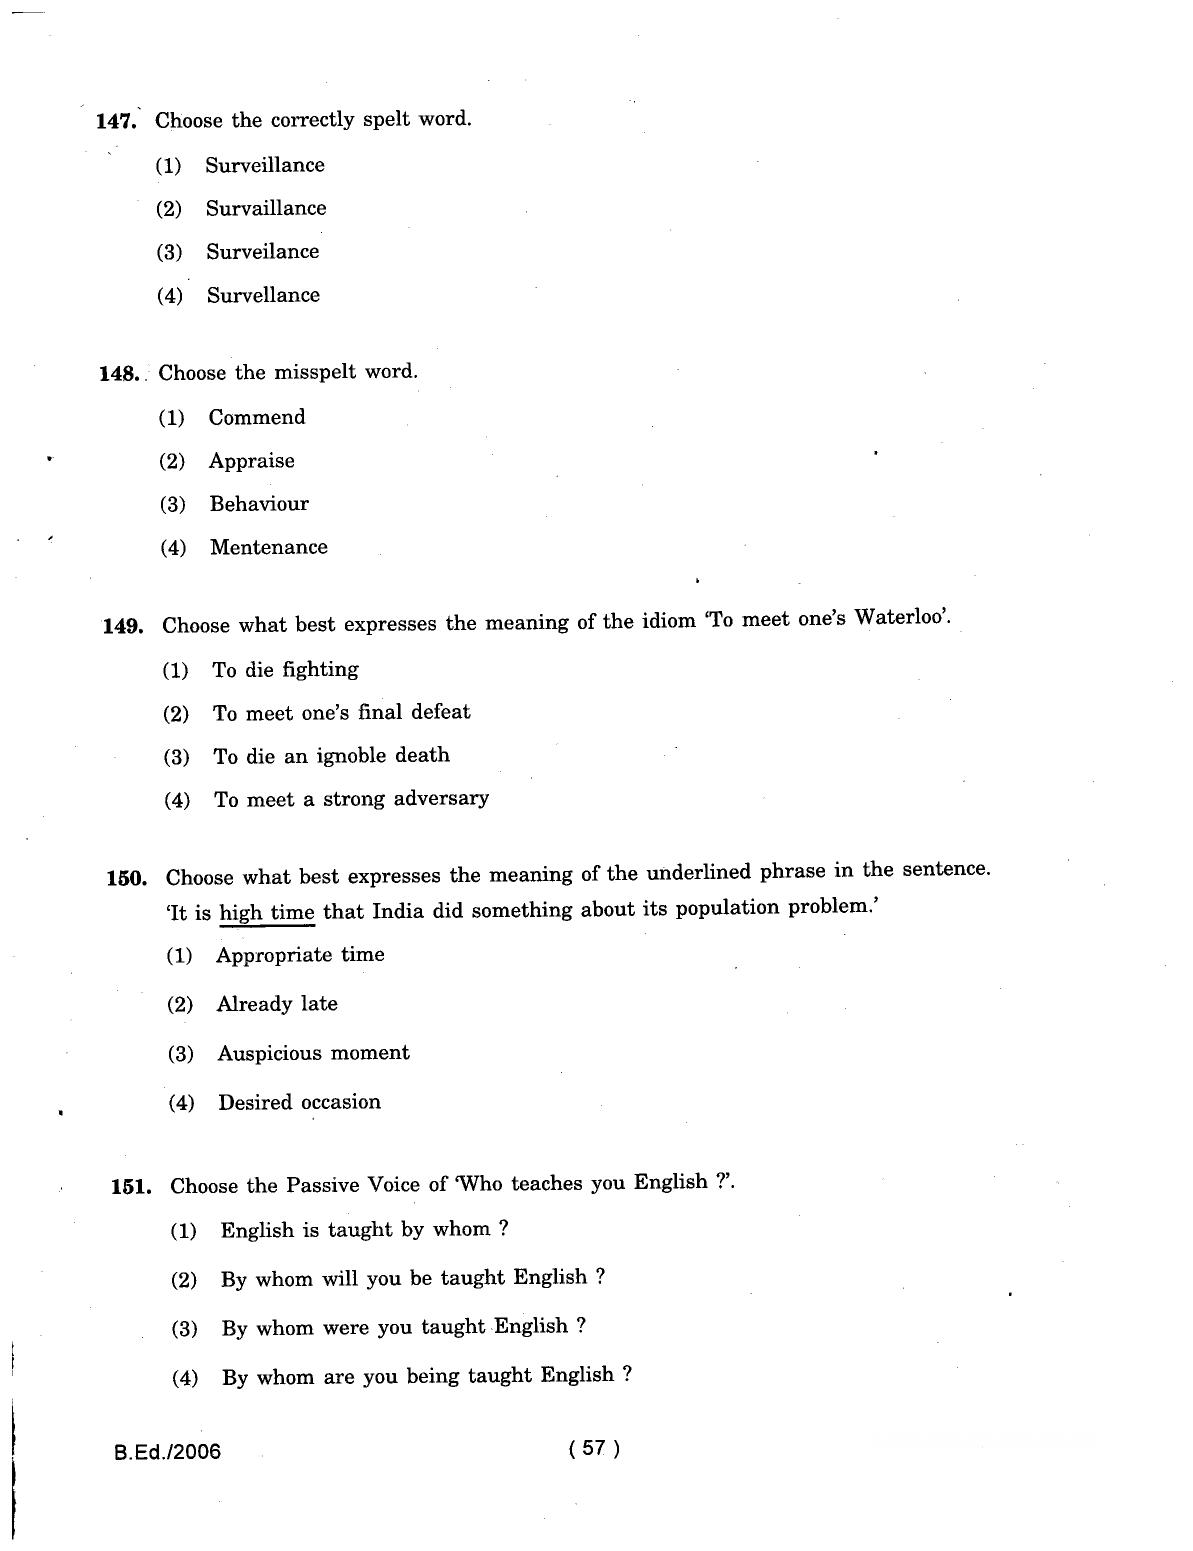 IGNOU B.Ed 2006 Question Paper - Page 57